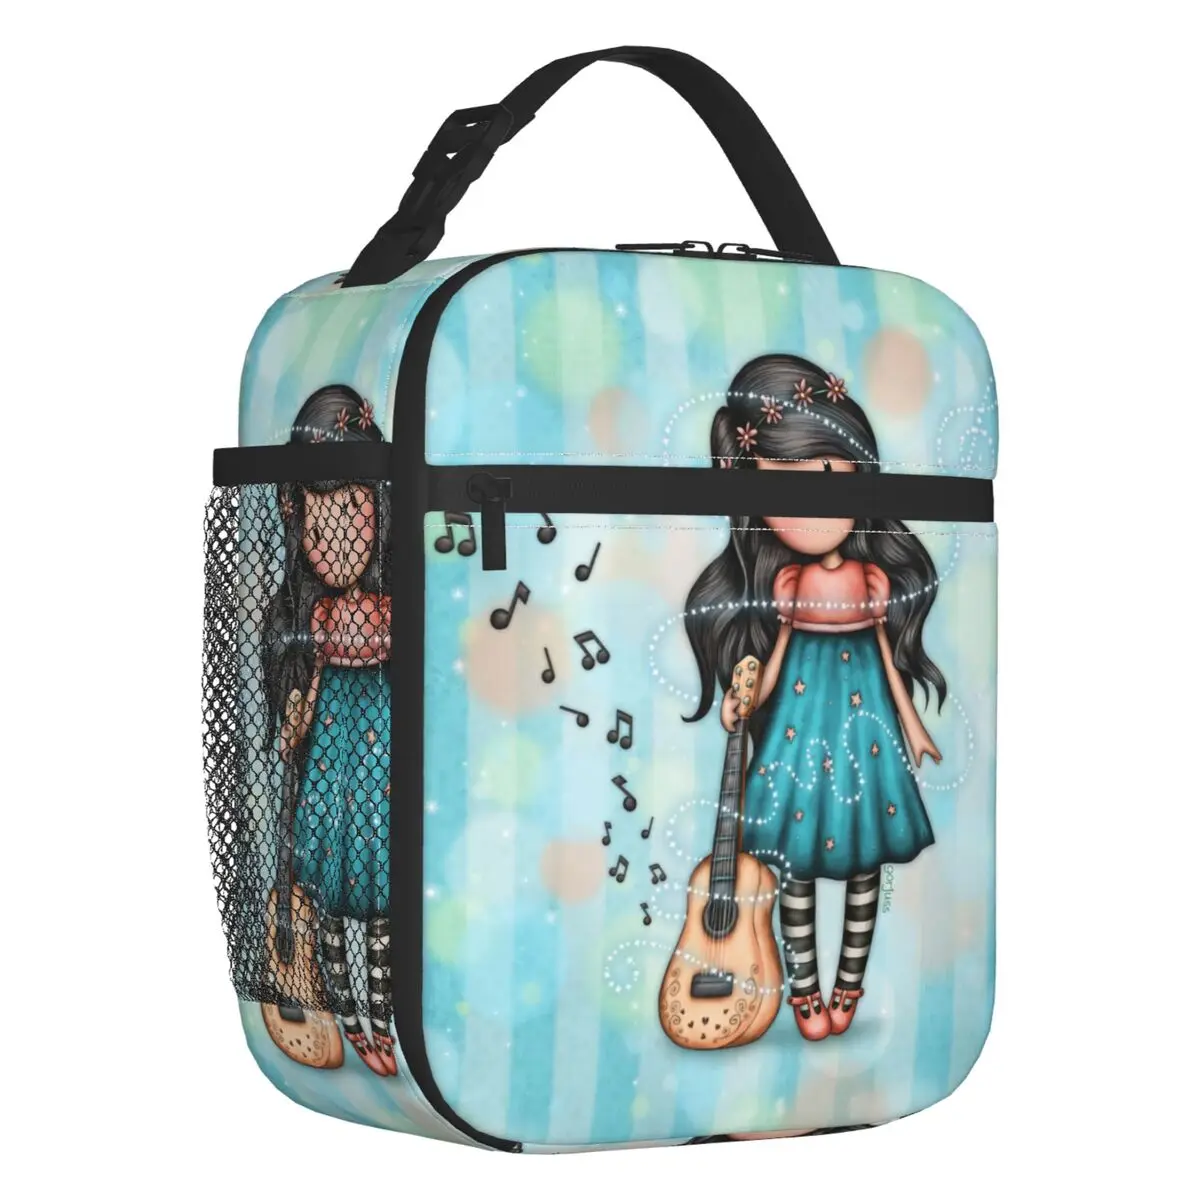 Anime Girl Santoro Gorjuss Insulated Lunch Bag for School Office Portable Thermal Cooler Bento Box Women Kids